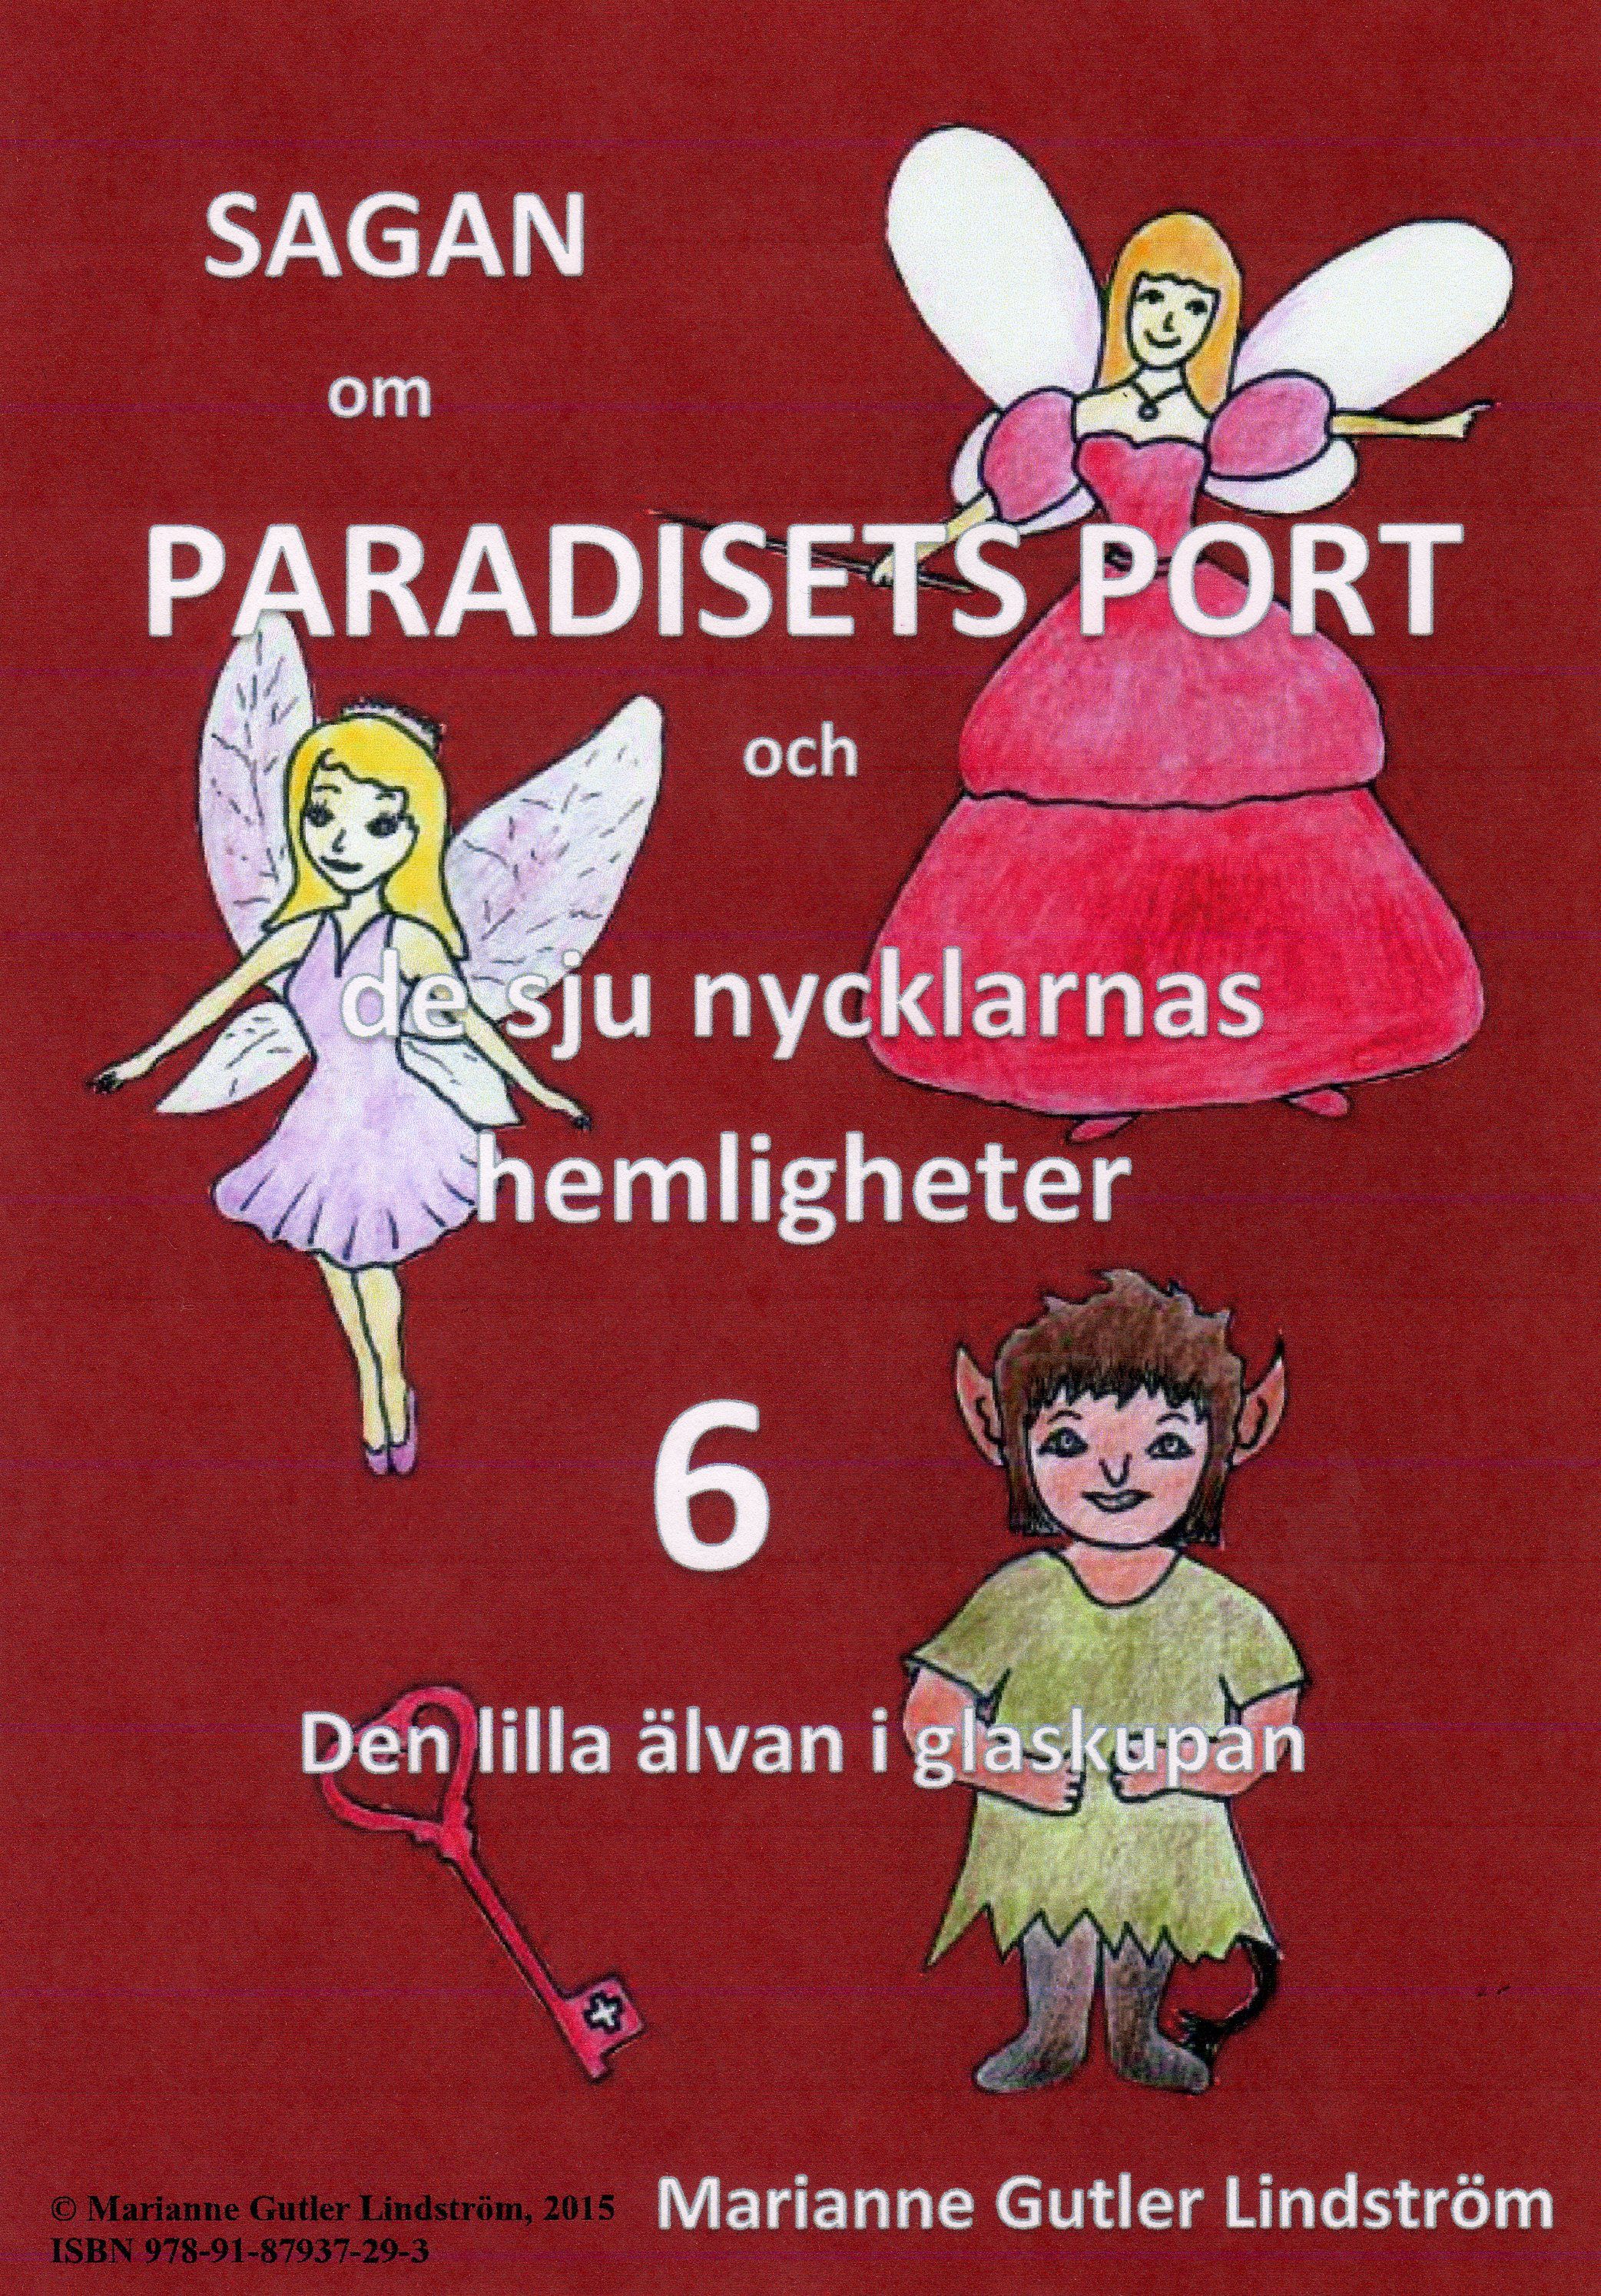 Sagan om Paradisets Port 6 Den lilla älvan i glaskupan, eBook by Marianne Gutler Lindström